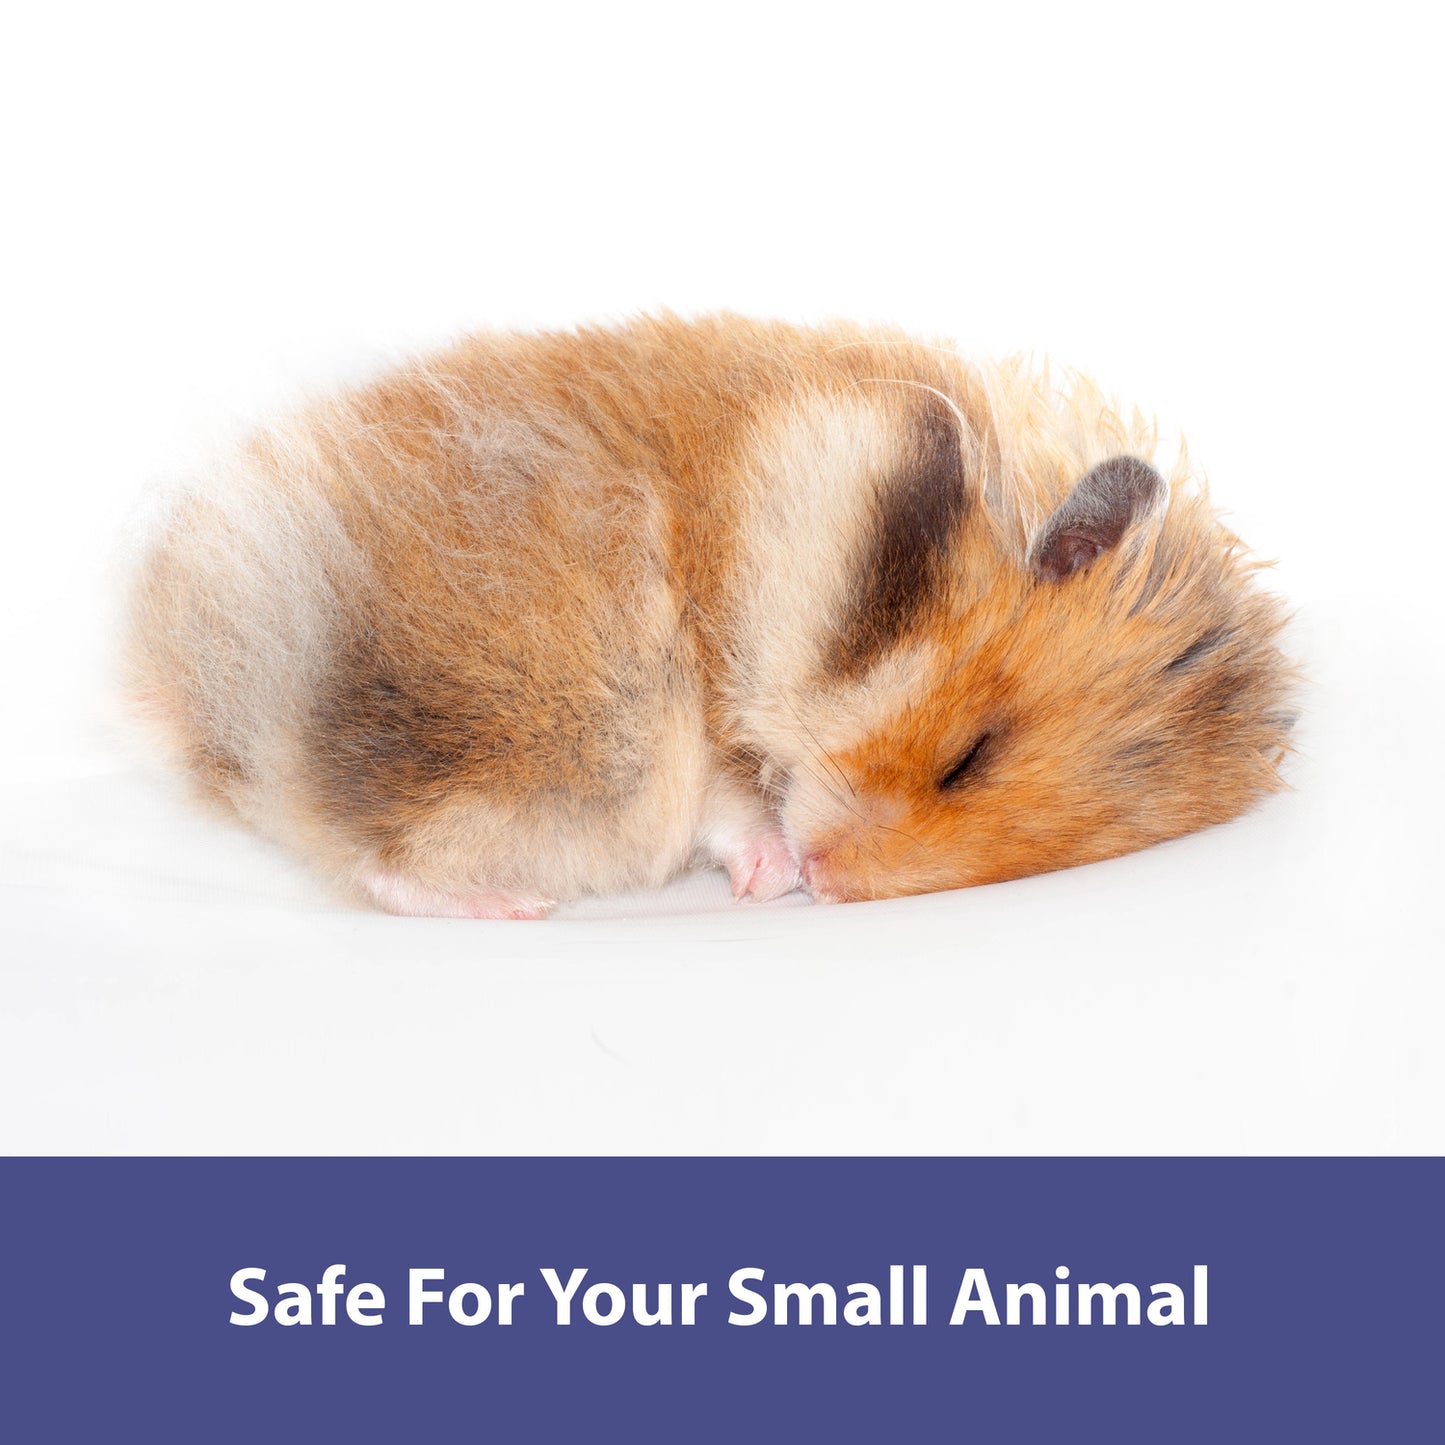 Kaytee Forti-Diet Clean Comfort Small Pet Bedding, Natural 24.6 Liters